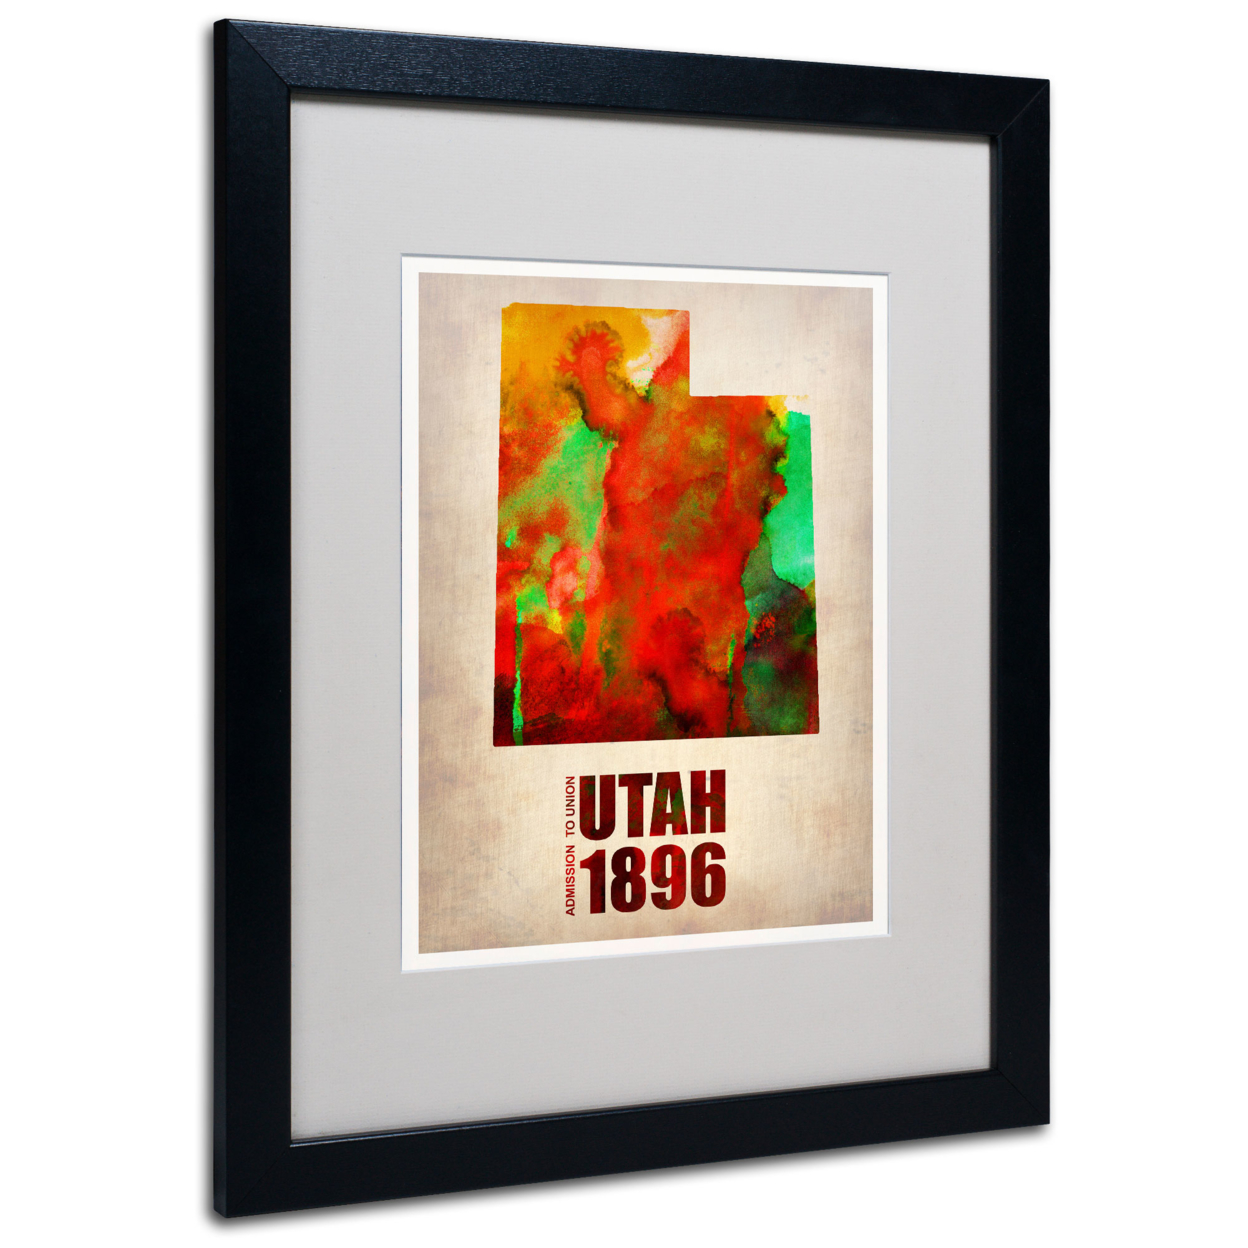 Naxart 'Utah Watercolor Map' Black Wooden Framed Art 18 X 22 Inches